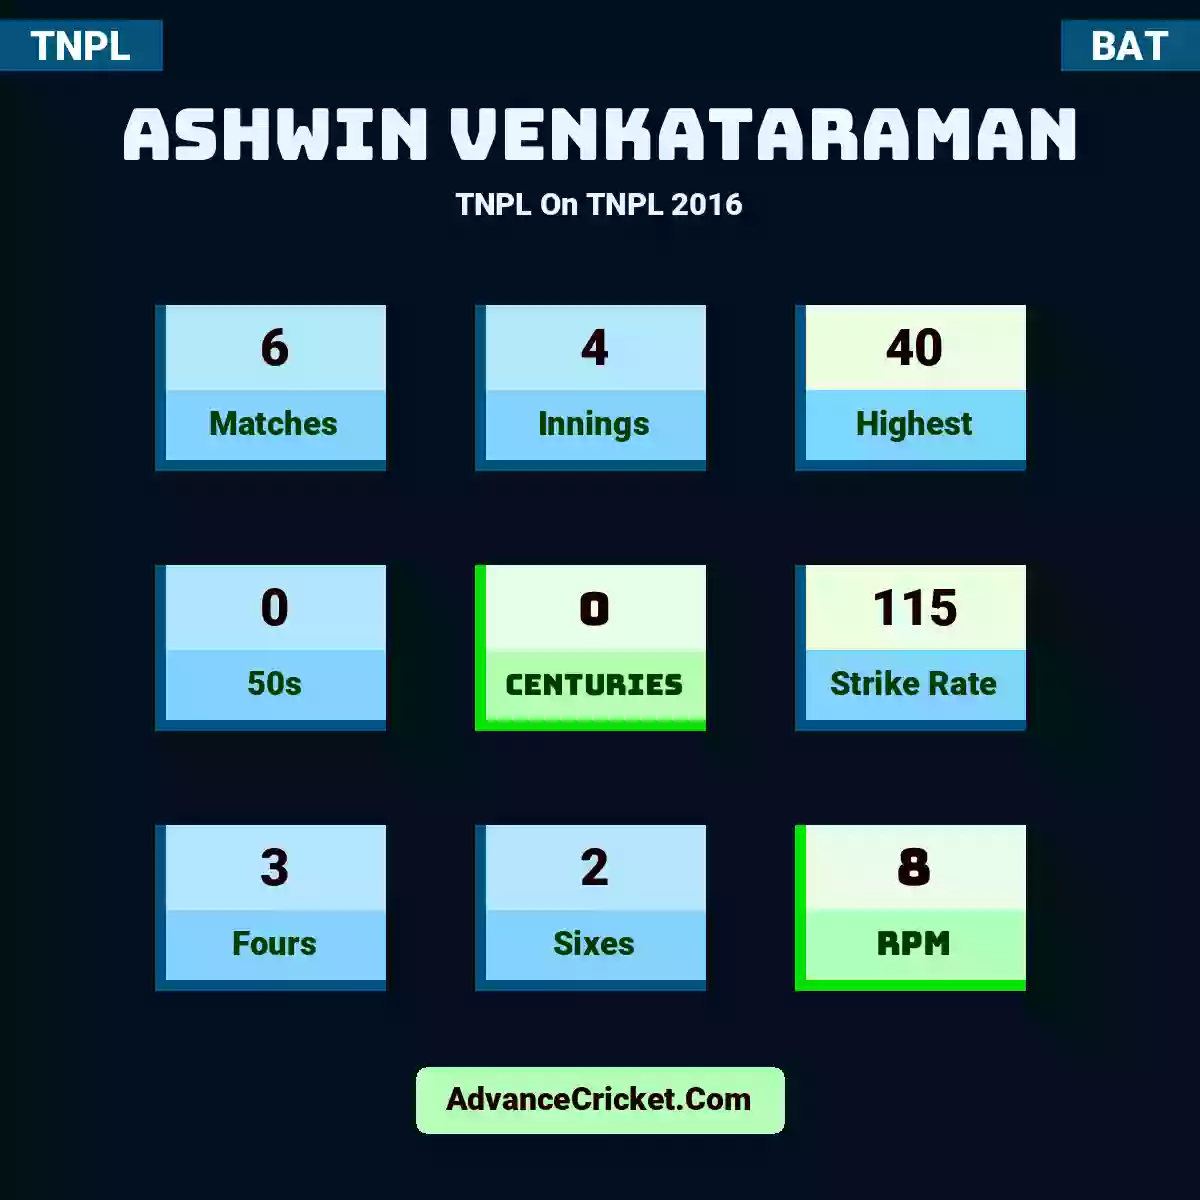 Ashwin Venkataraman TNPL  On TNPL 2016, Ashwin Venkataraman played 6 matches, scored 40 runs as highest, 0 half-centuries, and 0 centuries, with a strike rate of 115. A.Venkataraman hit 3 fours and 2 sixes, with an RPM of 8.